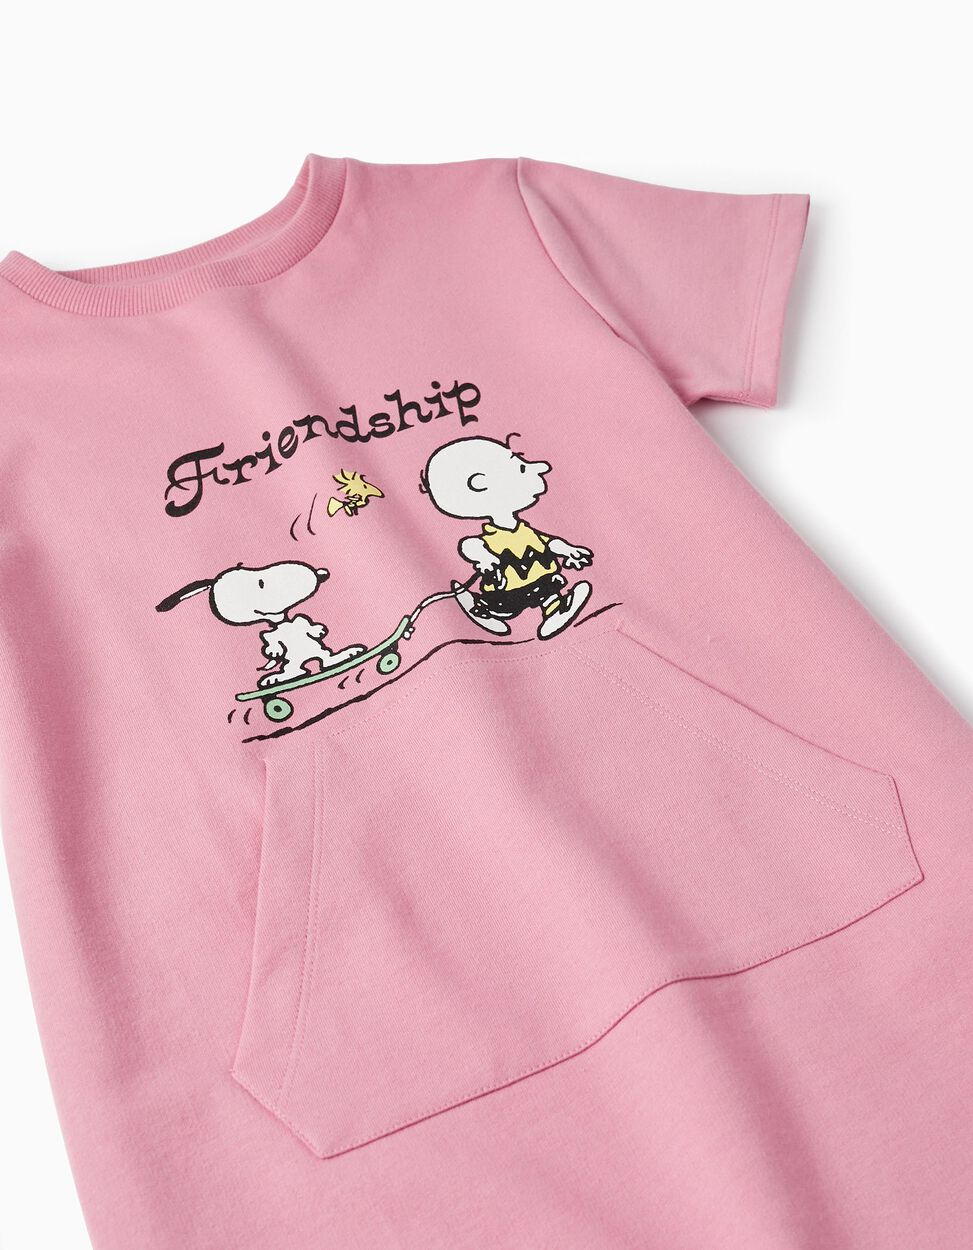 Comprar Online Vestido de Algodão para Menina 'Snoopy - Peanuts', Rosa